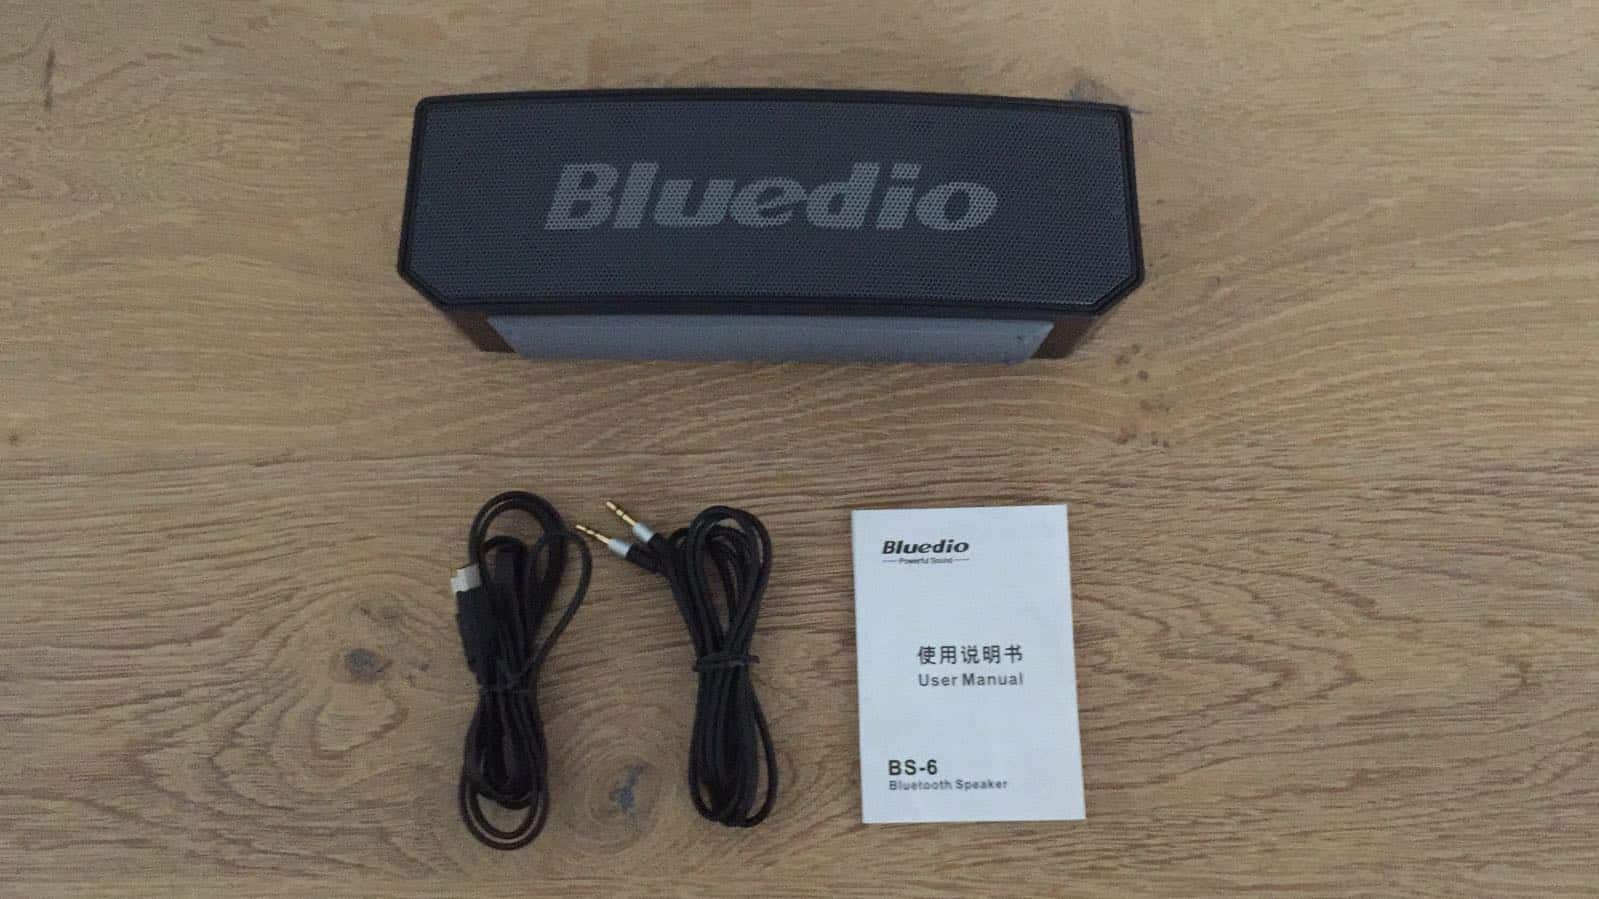 Bluedio BS 6 Box Content